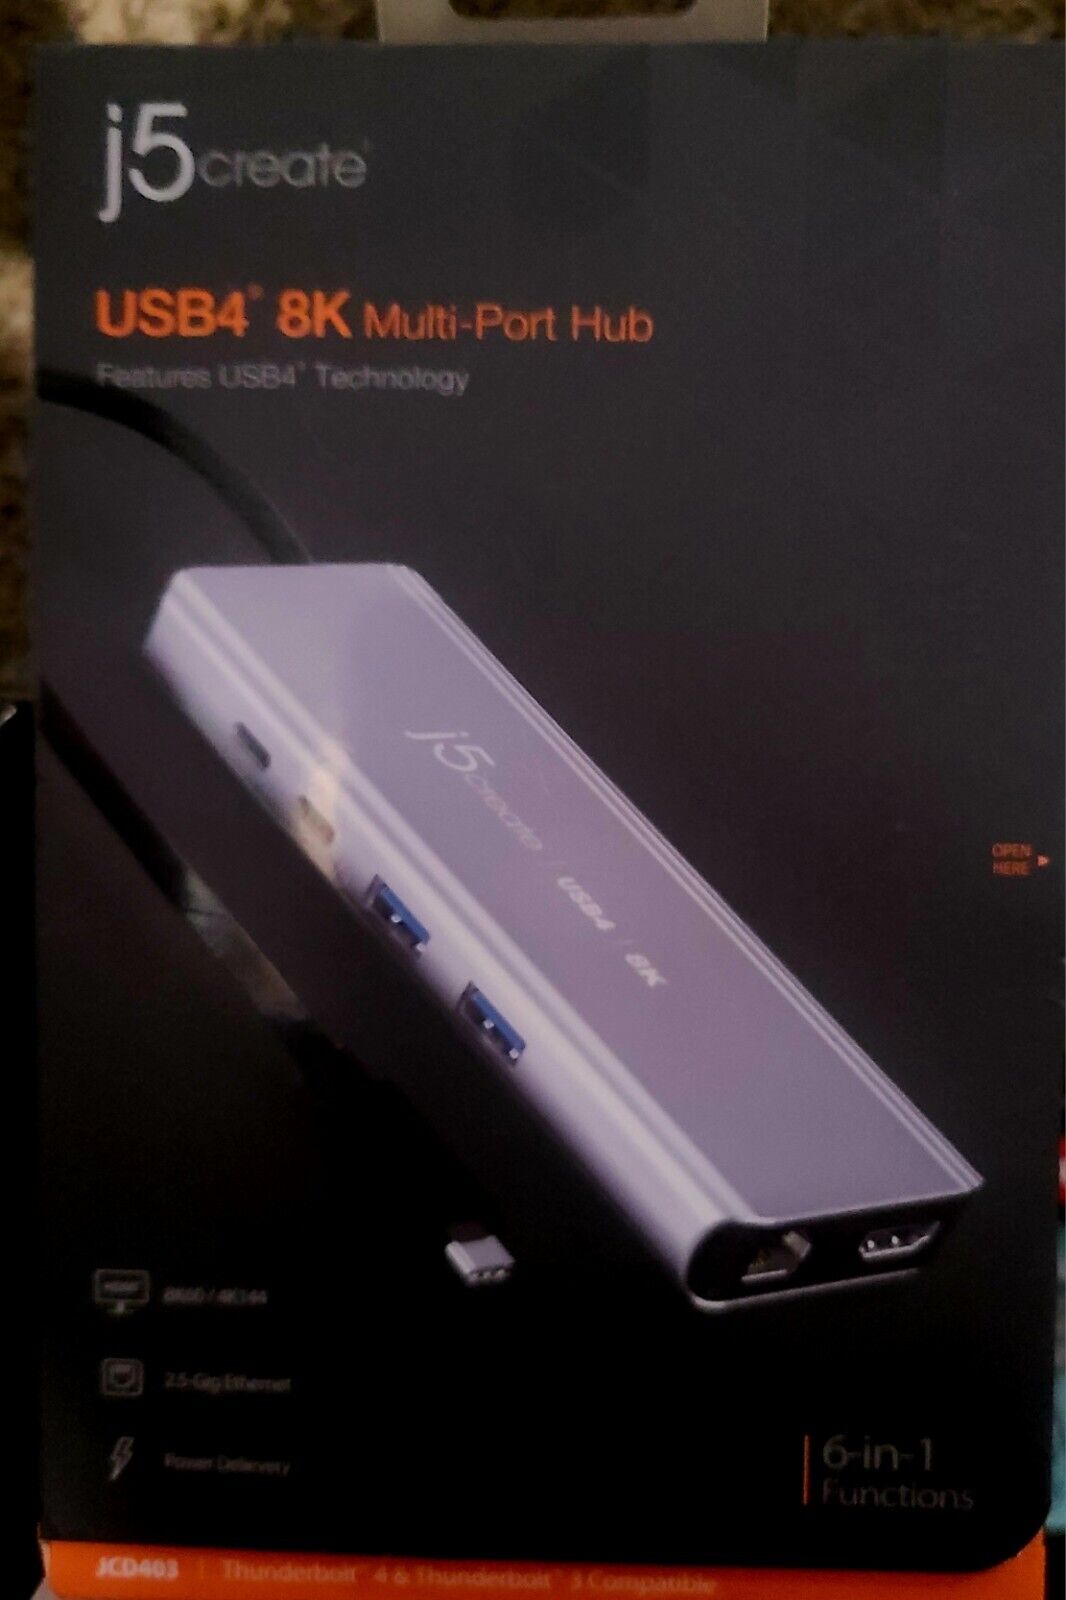 j5create JCD401-1A USB4 4K Multi-Port Hub 6-in-1 Functions OPEN BOX